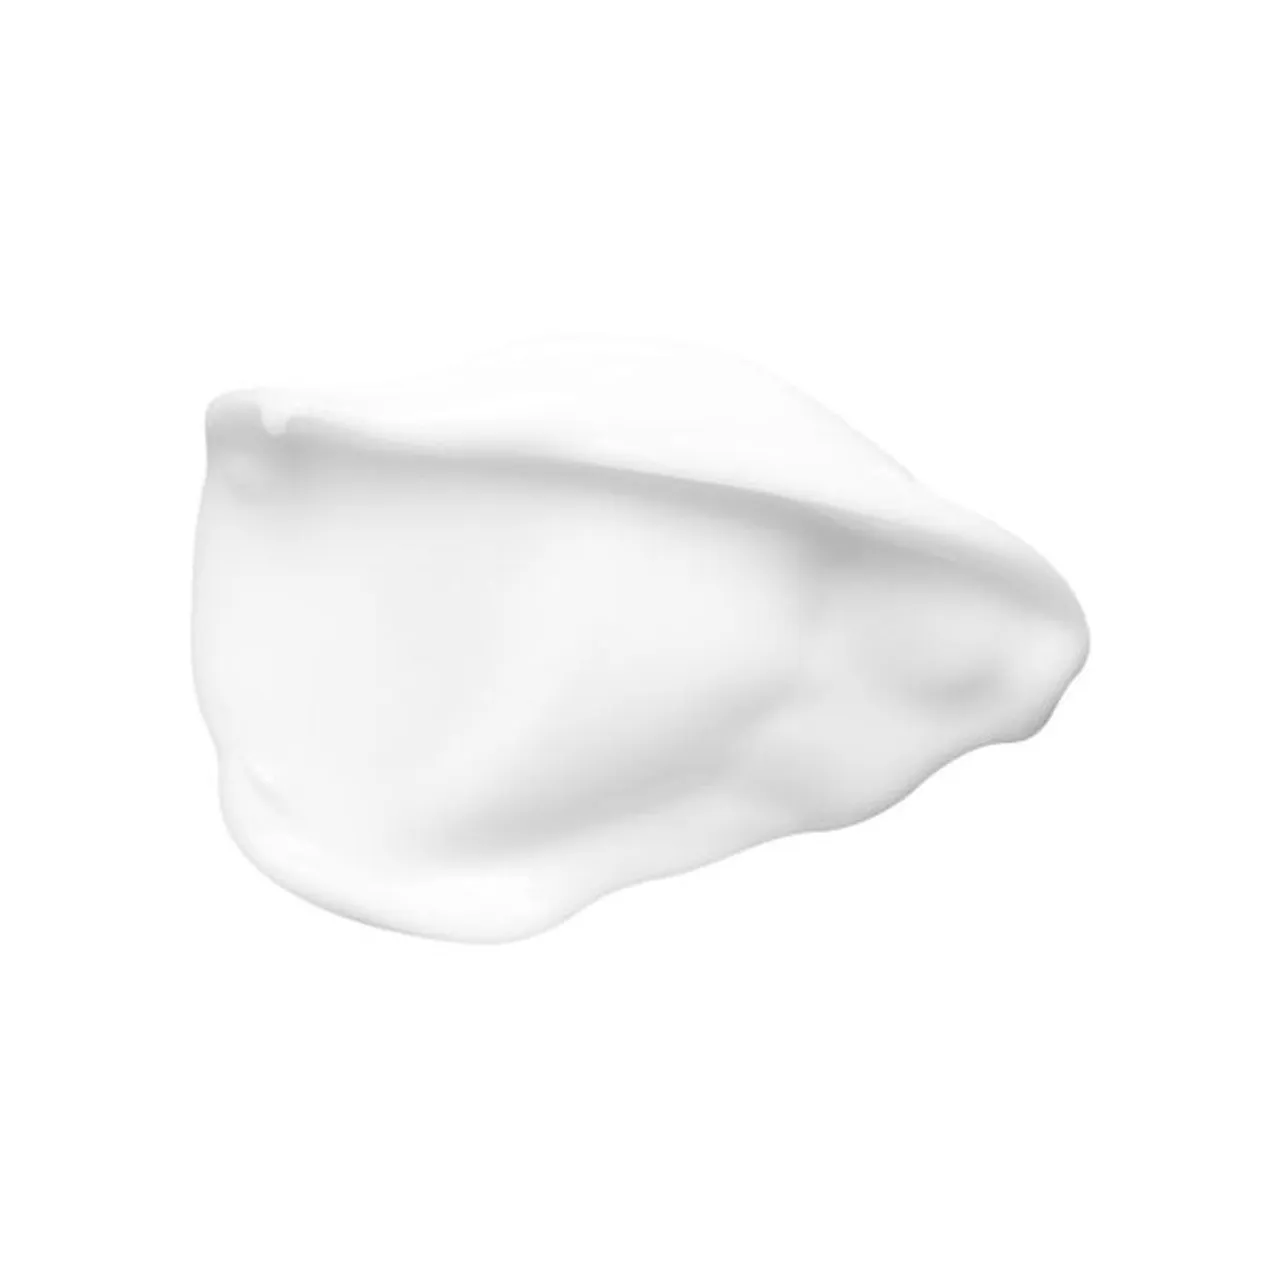 Clarins Hand and Nail Treatment Cream, 100ml - Unisex - Size: 100ml